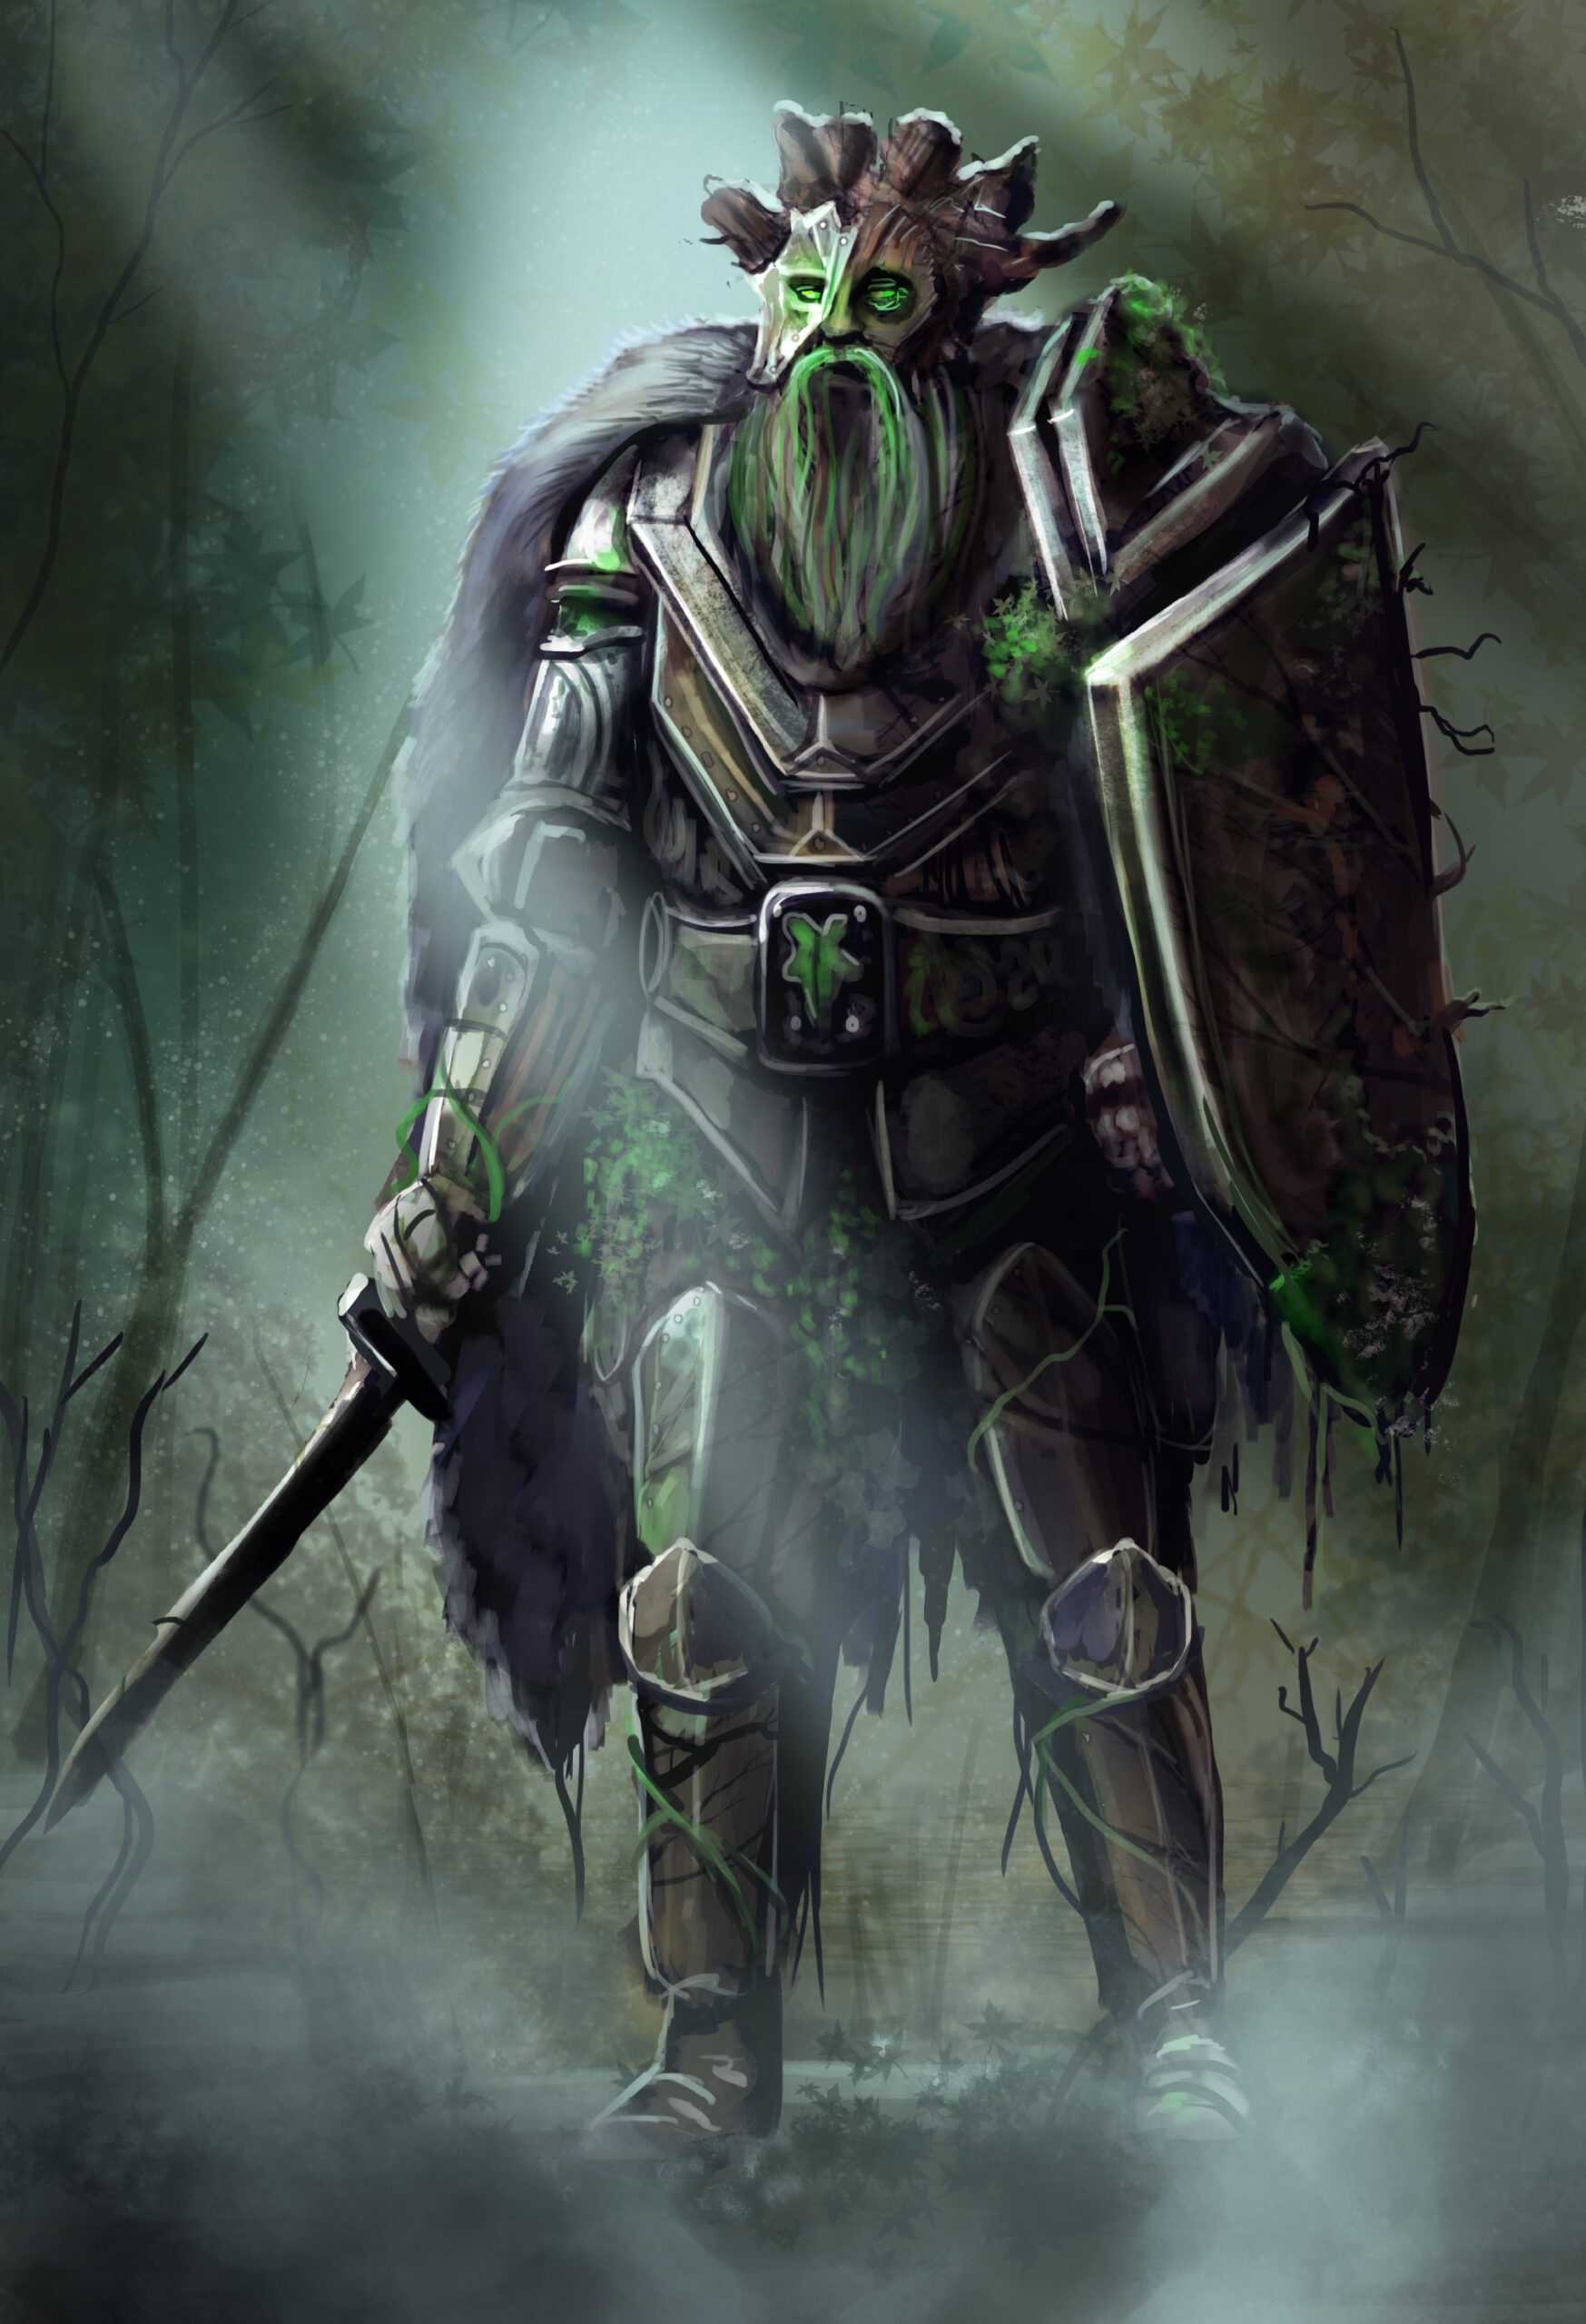 The Green Knight of Arthurian Legend